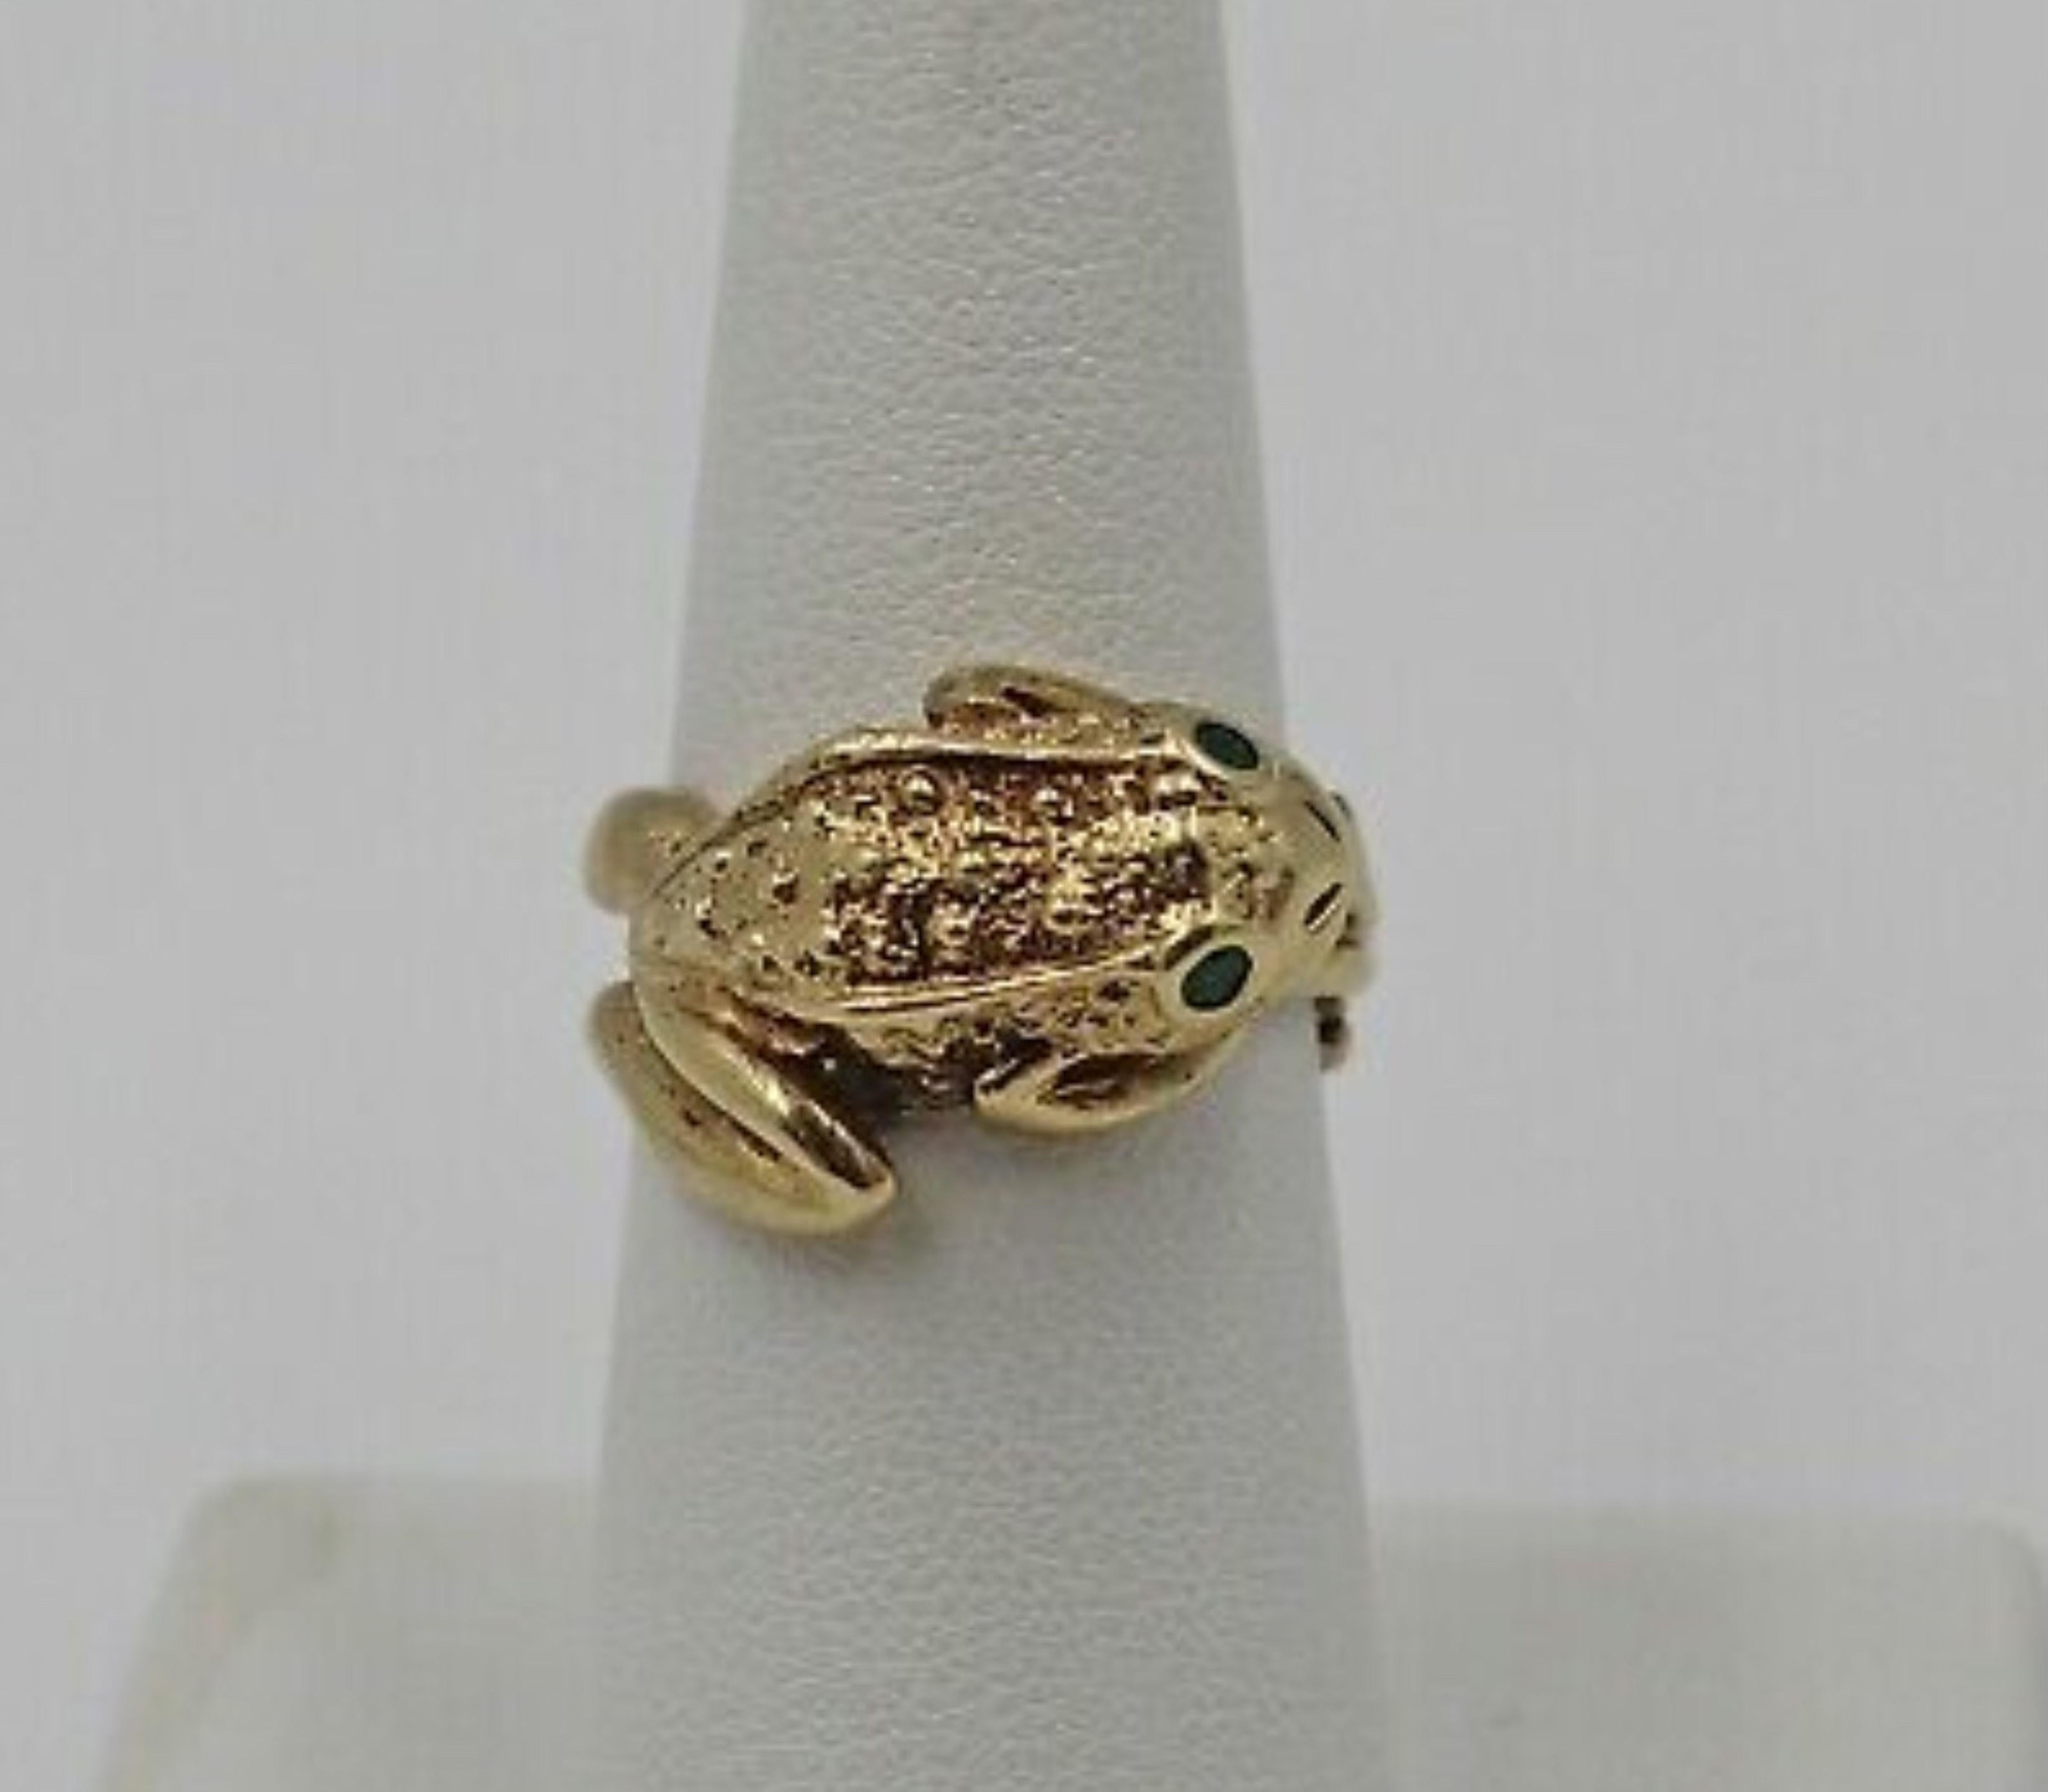 Modern Vintage 14 Karat Gold Frog Ring with Emerald Eyes